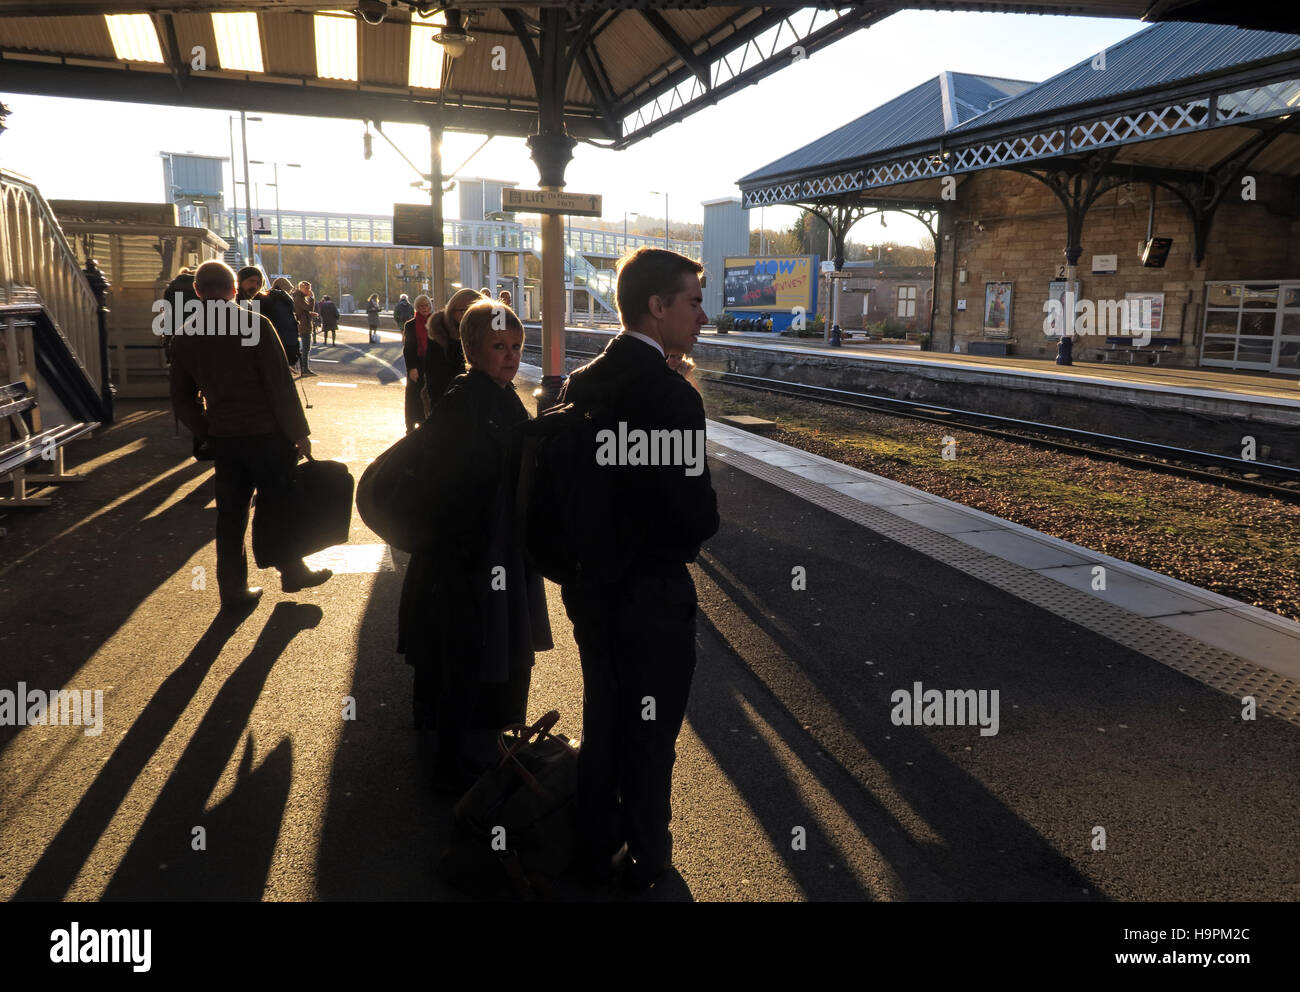 Passengers casting shadows on a railway platform, Perth,Scotland,UK Stock Photo